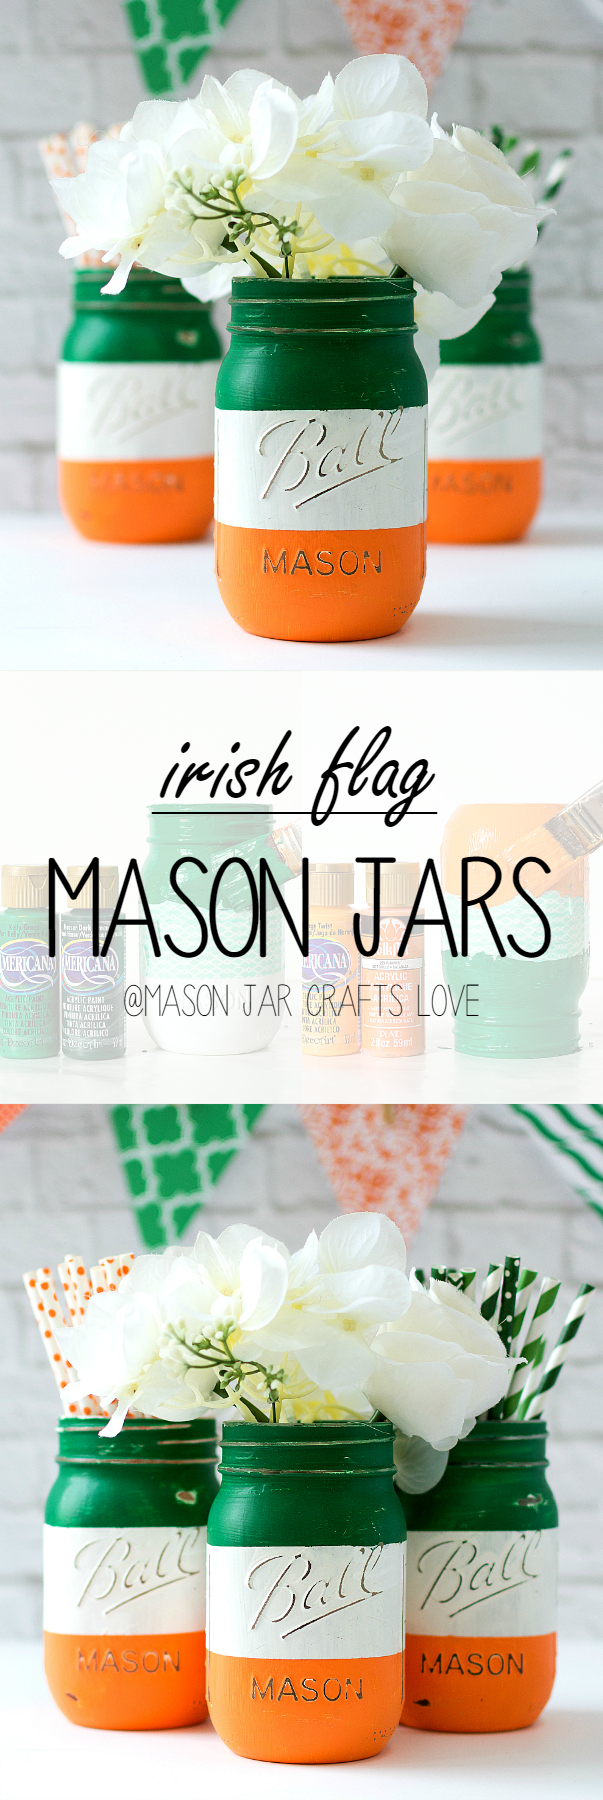 Mason Jar Craft Ideas - St Patricks Day Party Ideas